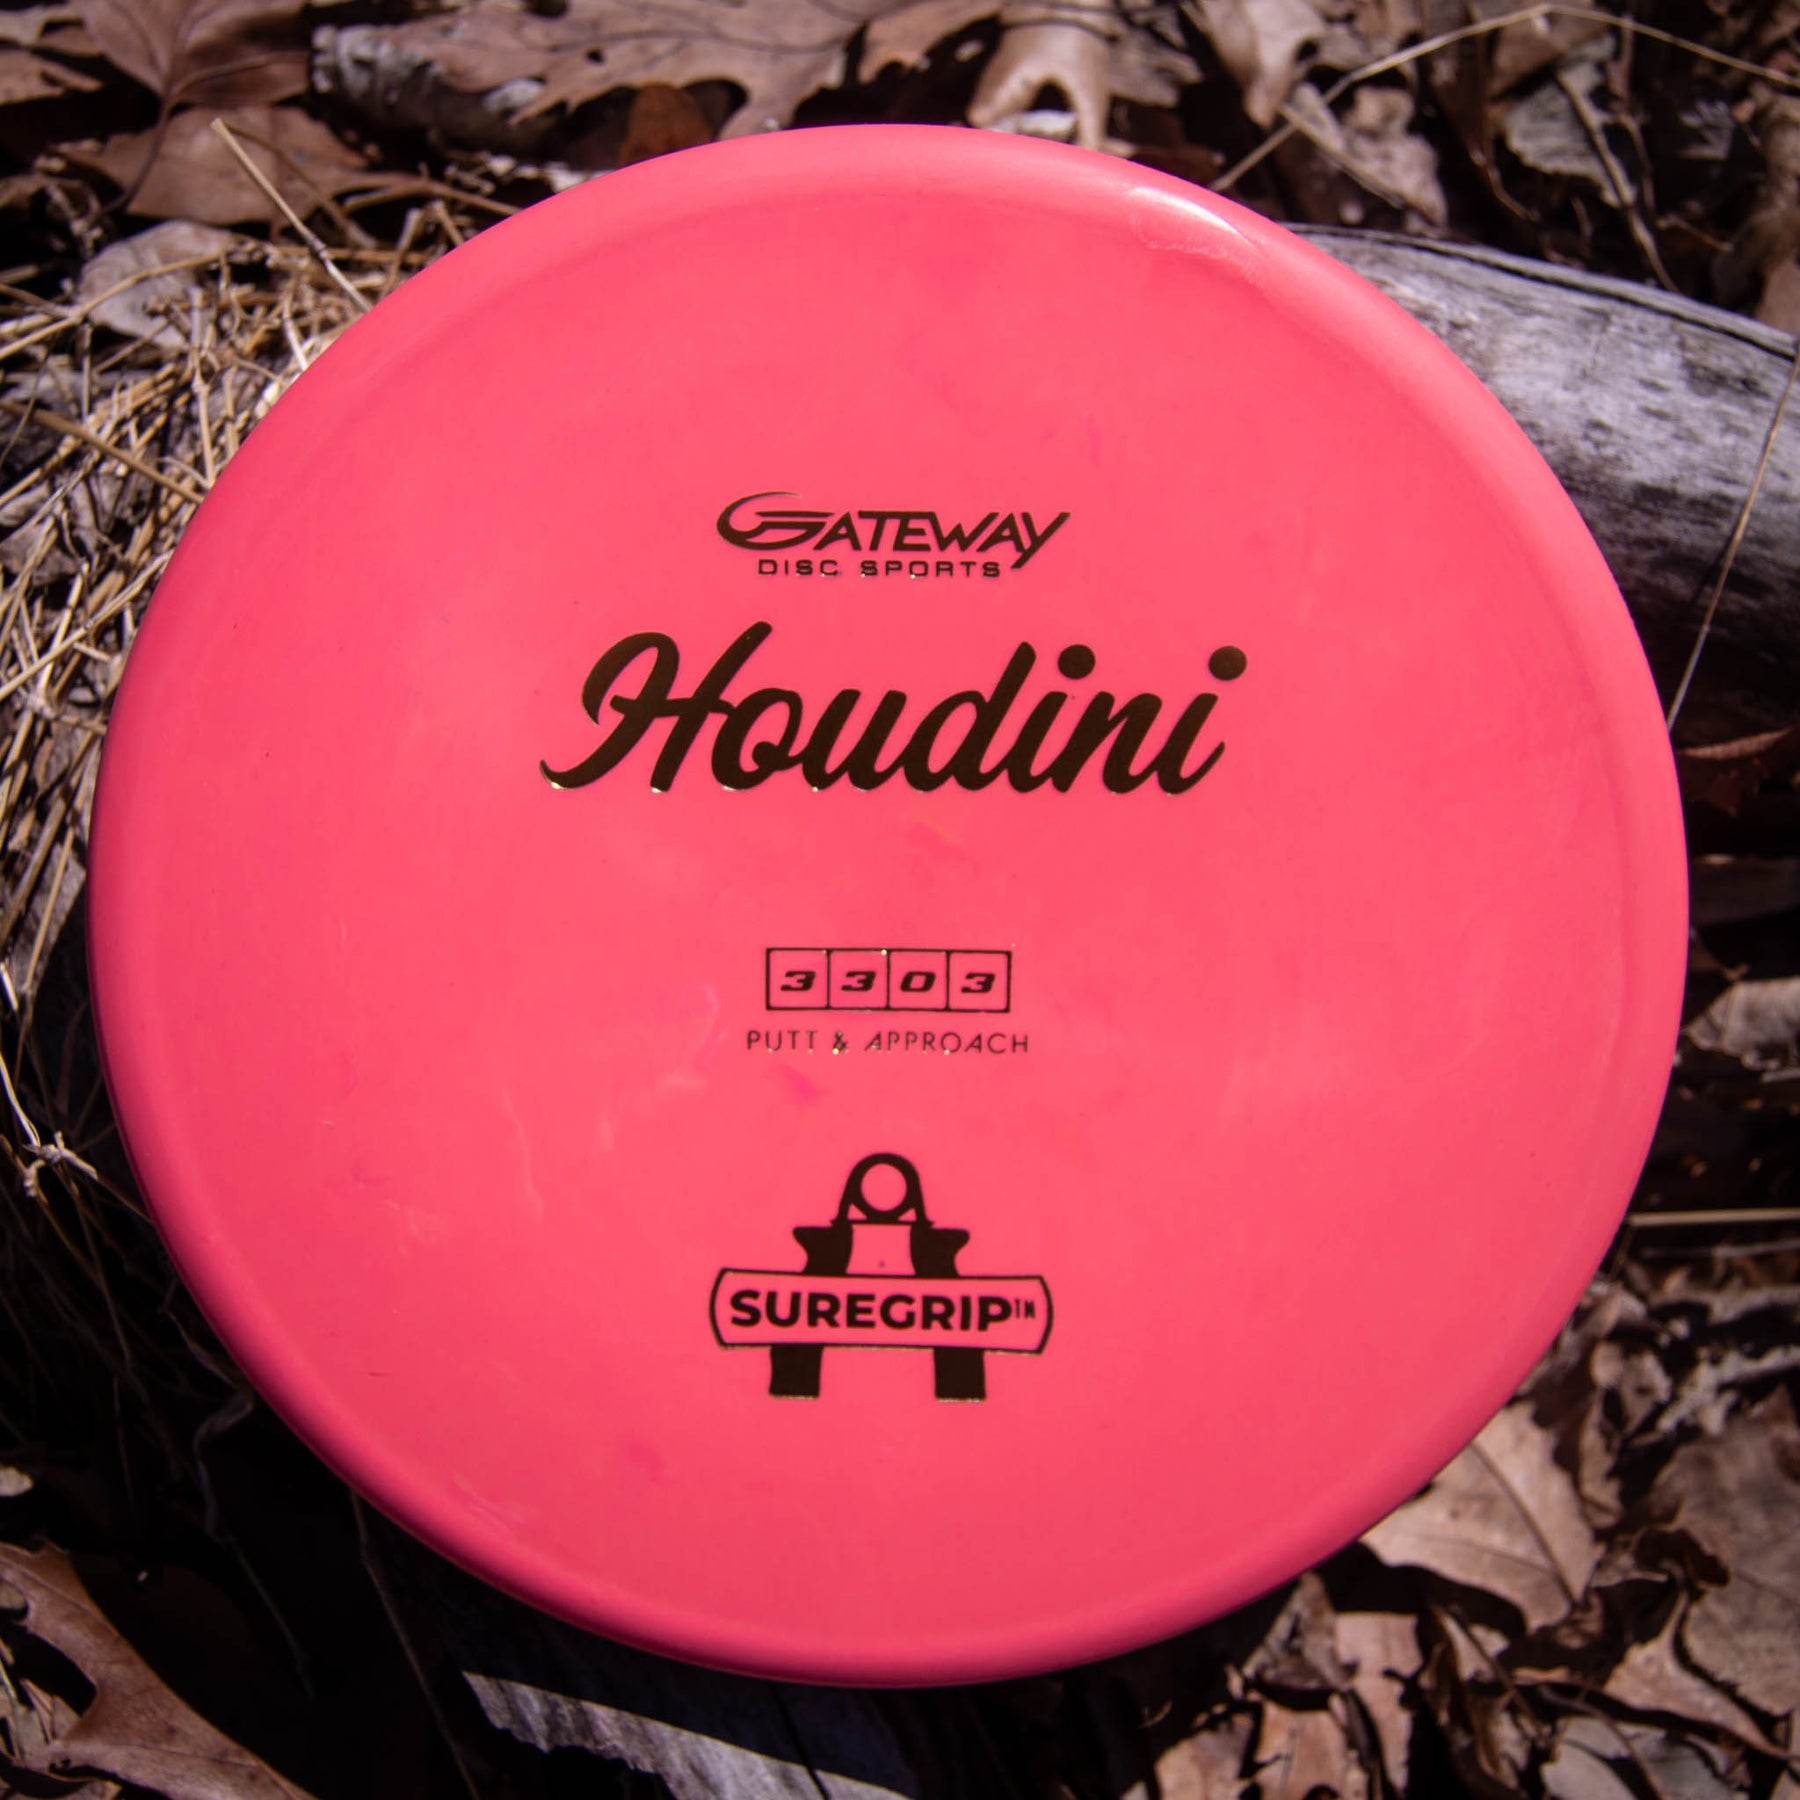 Houdini - SureGrip™ Superglow – Gateway Disc Sports